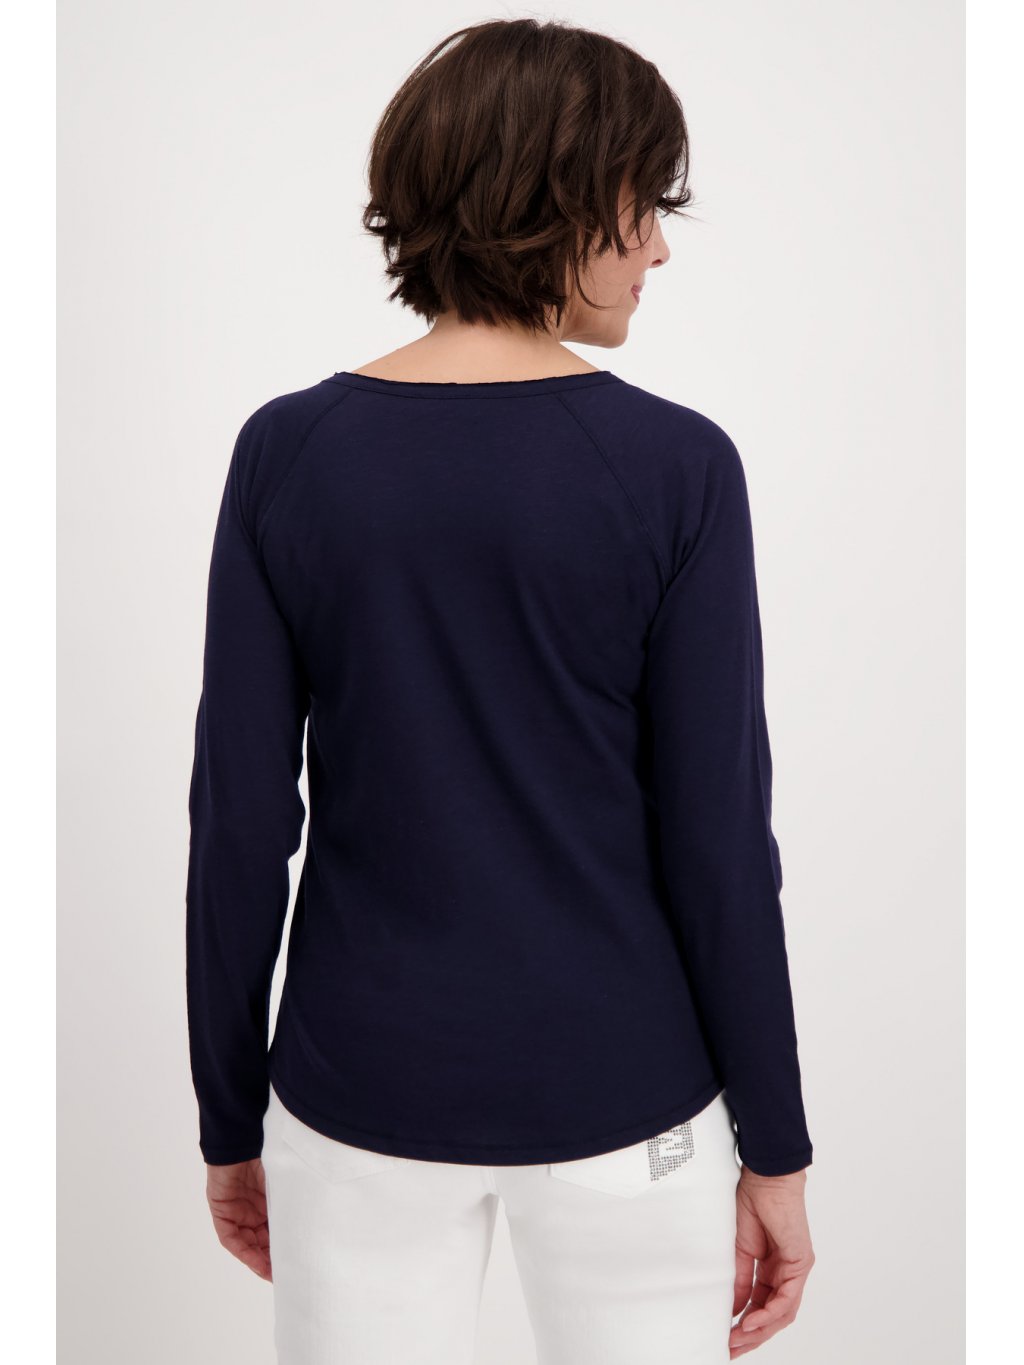 Tričko Monari 7146 tmavě modré s grafikou ženy